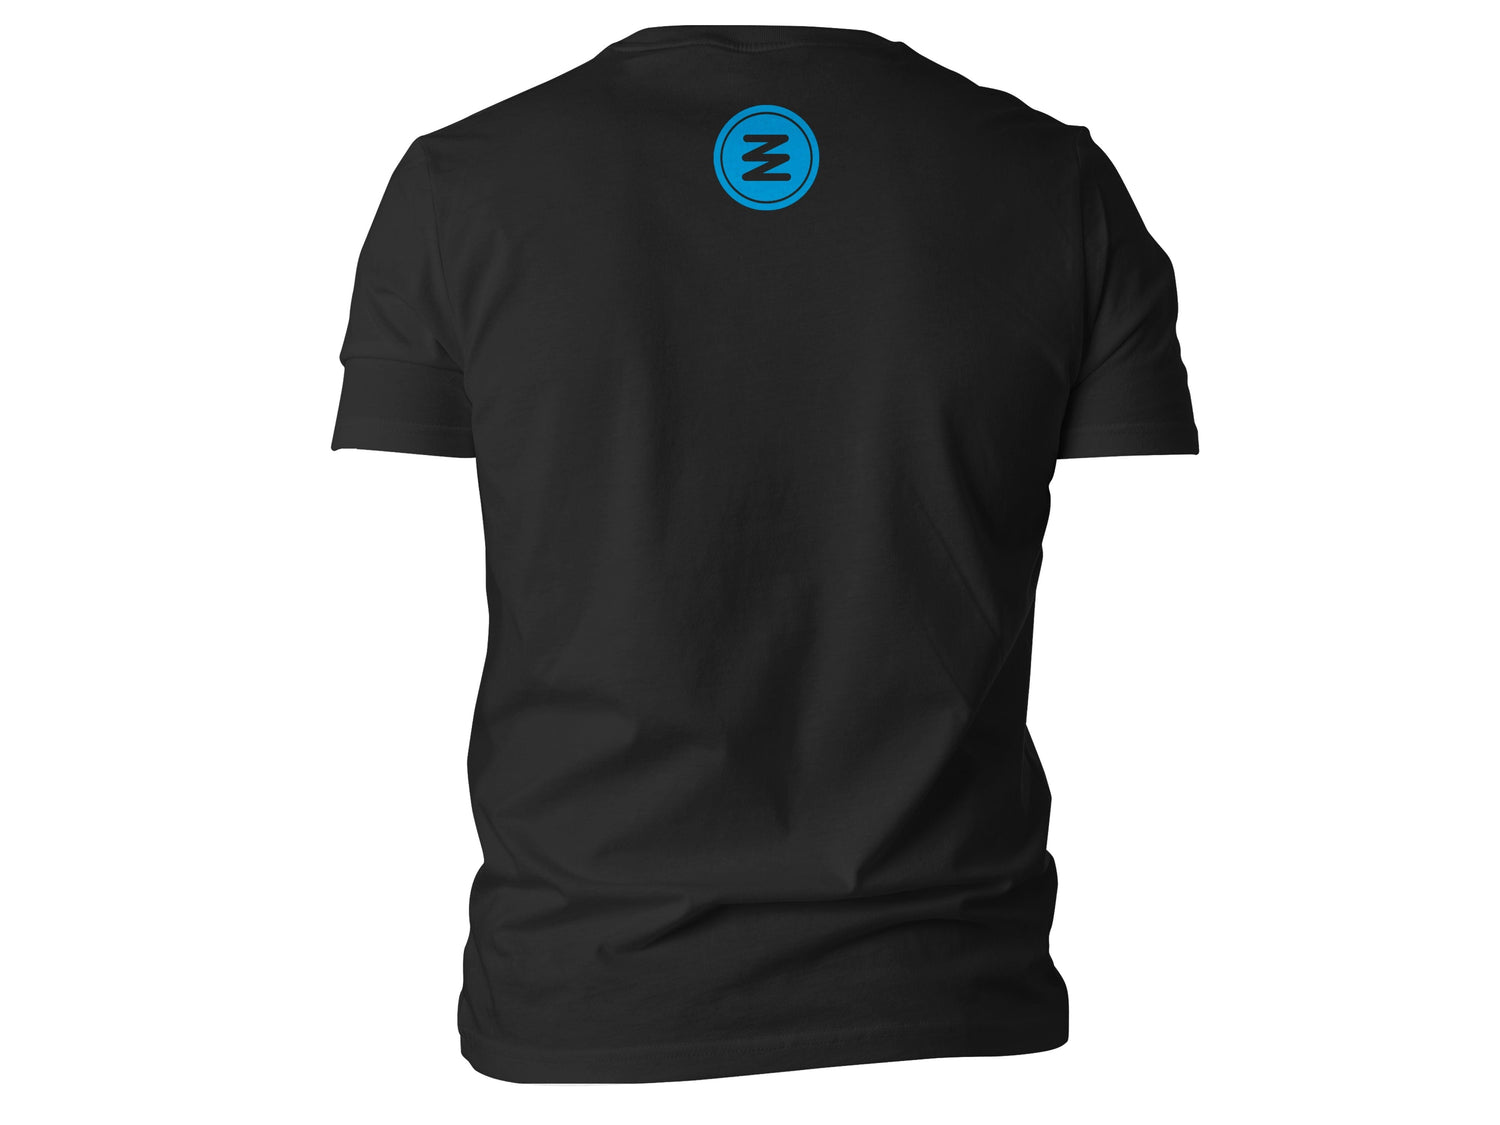 Springrates 'Logo' Shirt - Black